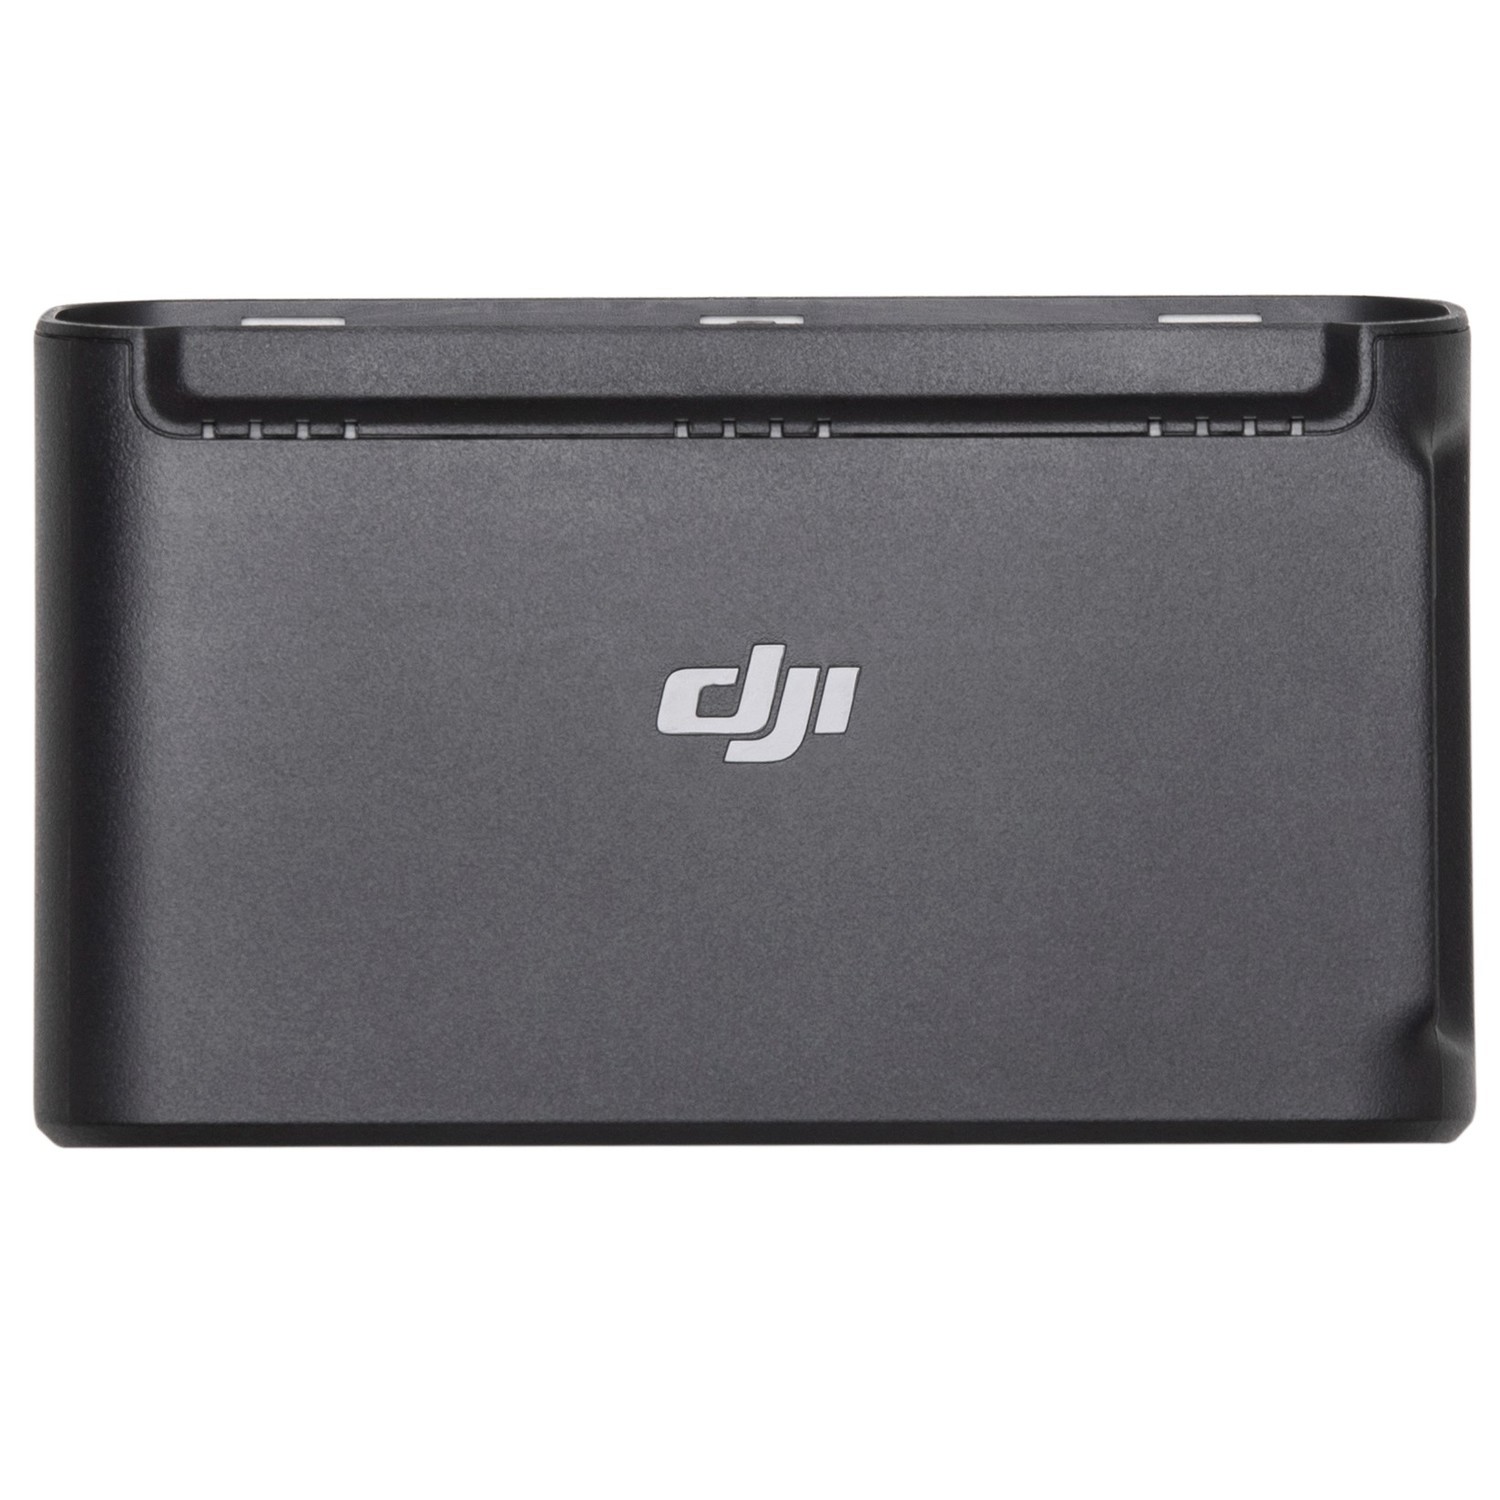 USB Cable for DJI Mavic Mini Drone Two-Way Battery Charger Charging Hub